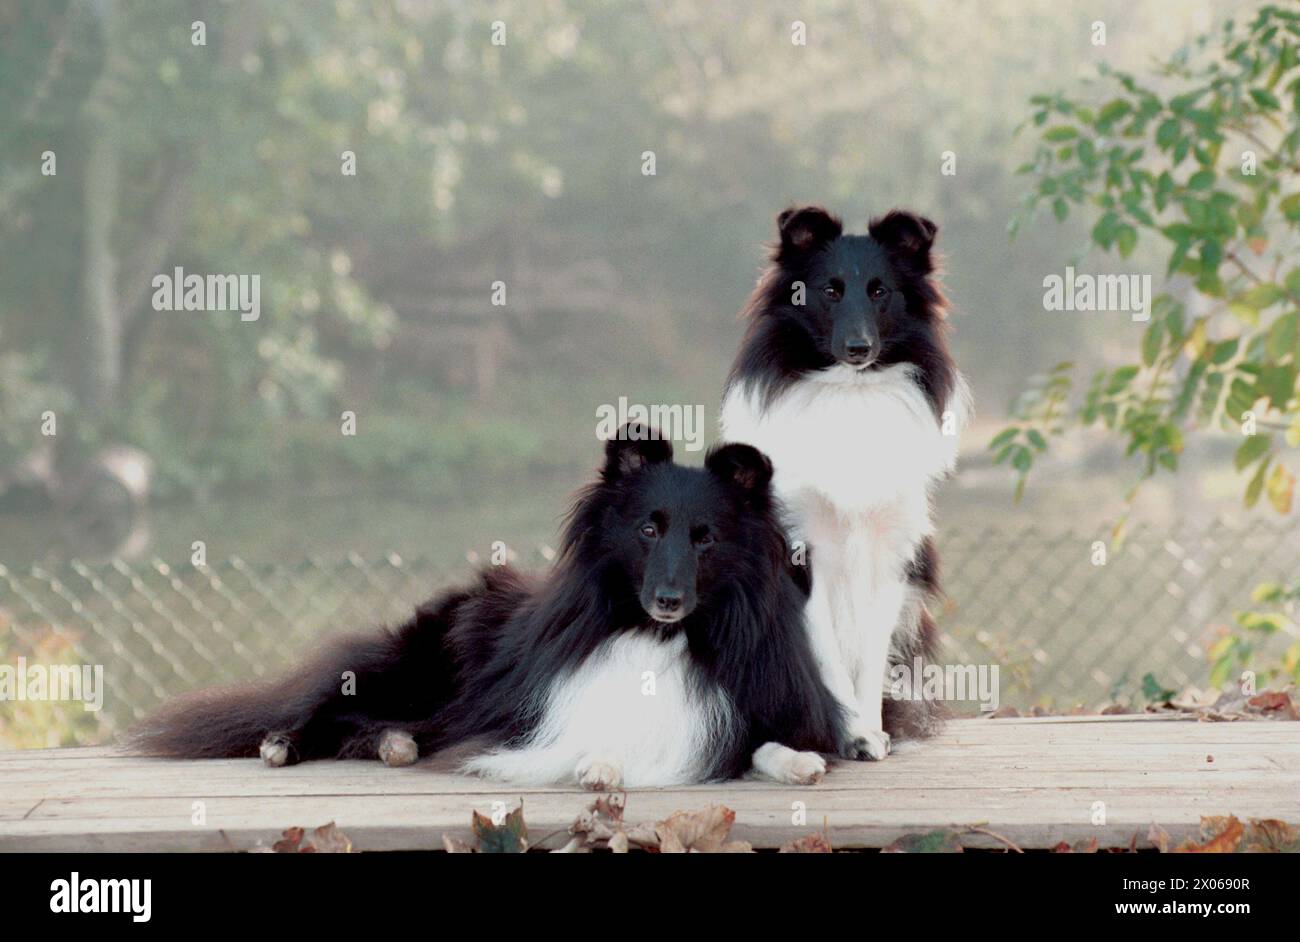 Bi Black Shetland Sheepdogs Posing Together in the Garden Stock Photo